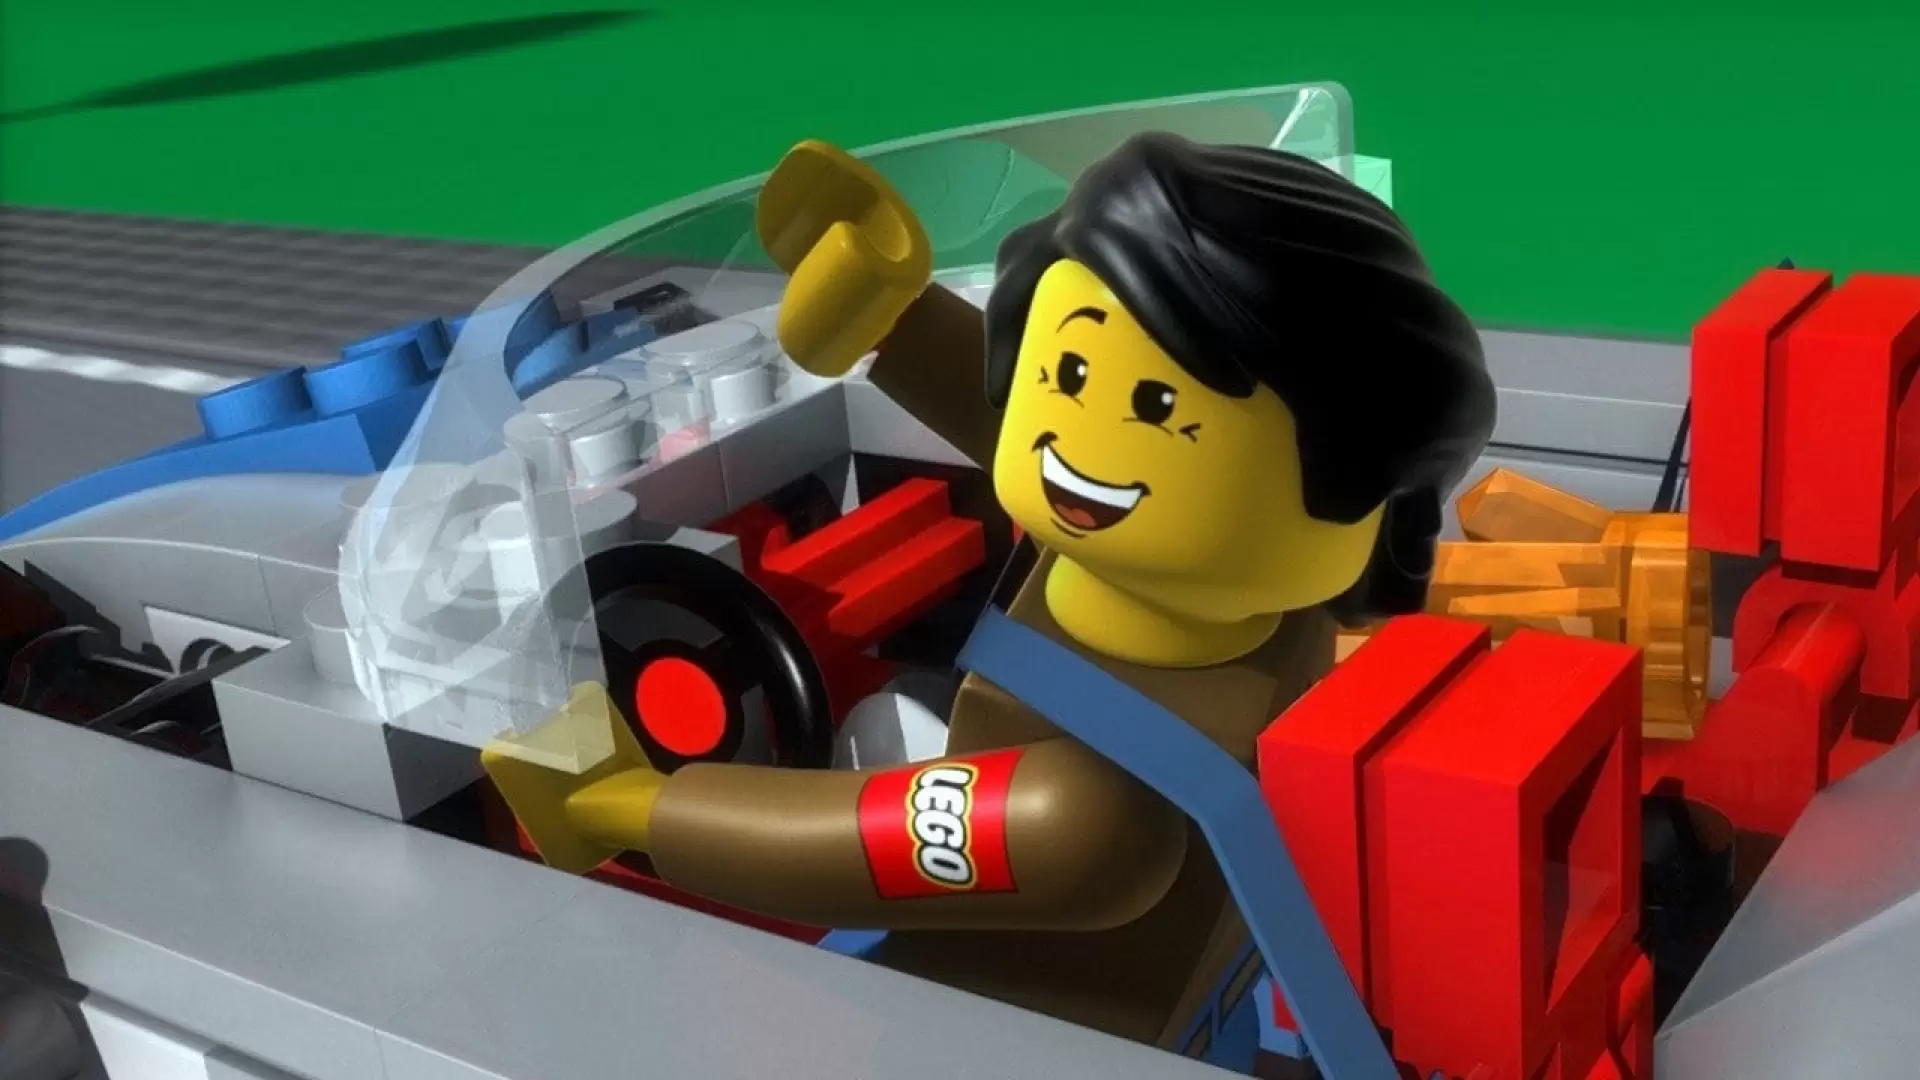 دانلود انیمیشن Lego: The Adventures of Clutch Powers 2010 با زیرنویس فارسی